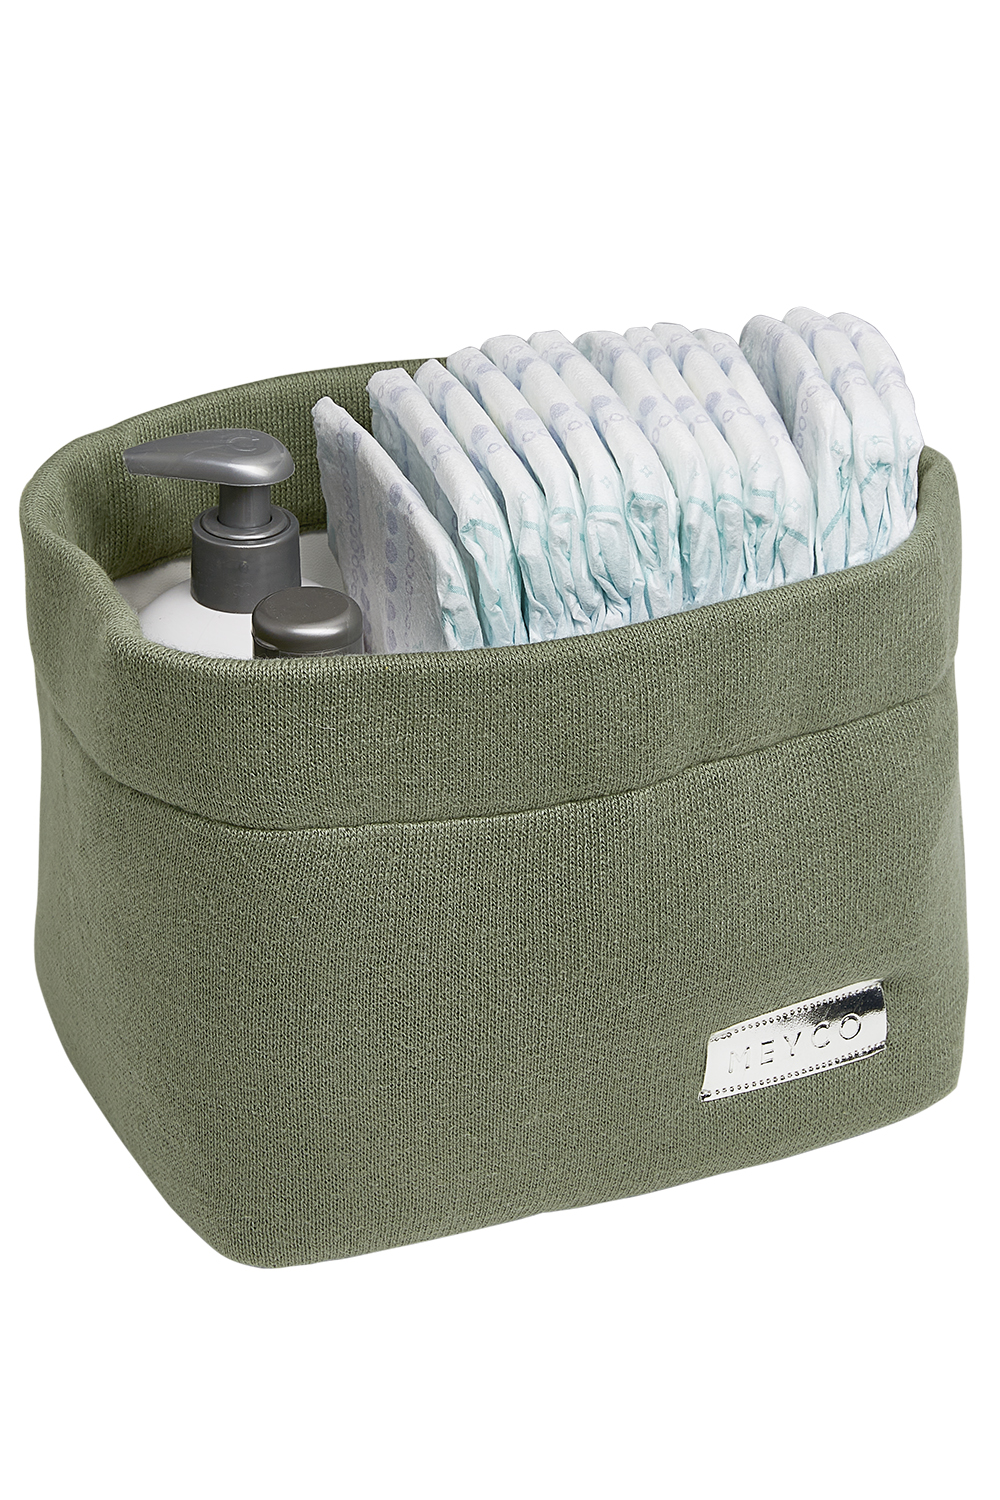 Nursery basket Knit Basic - forest green - Small